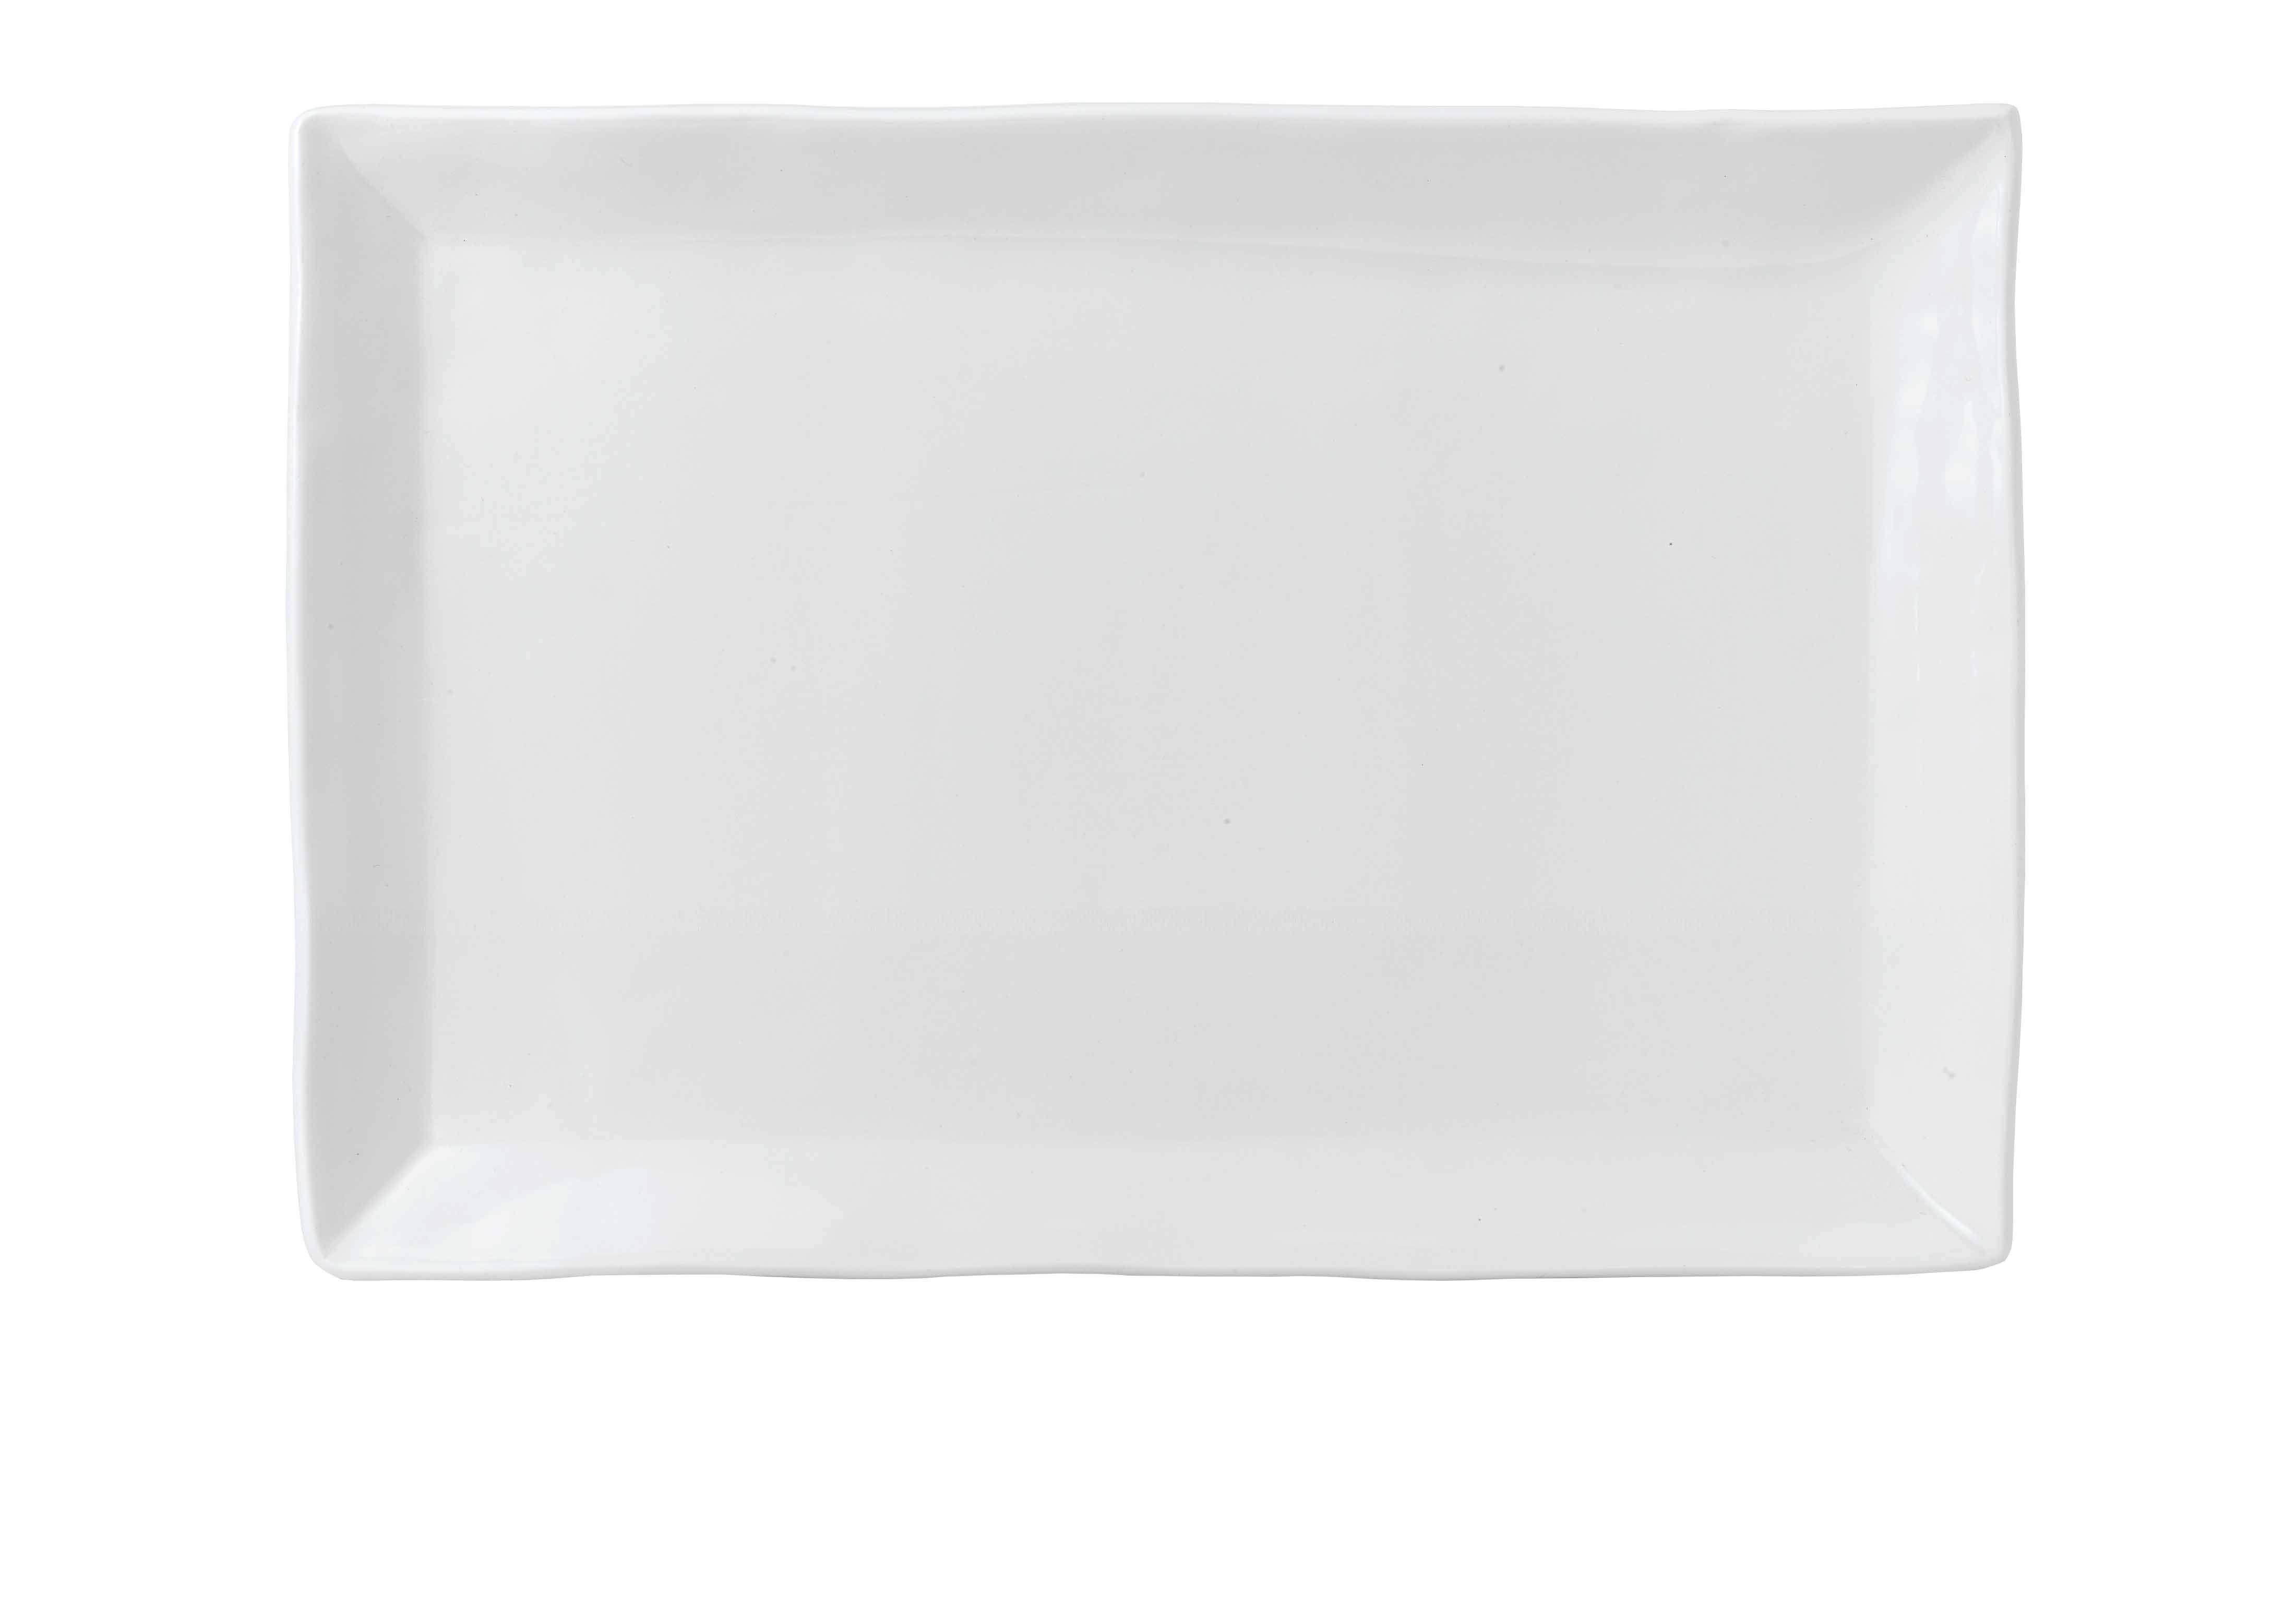 Dudson Servierbrett Dudson White Tablett Rechteckig 34.5X23.3Cm Weiß 6er Pack, Feinstes Porzellan